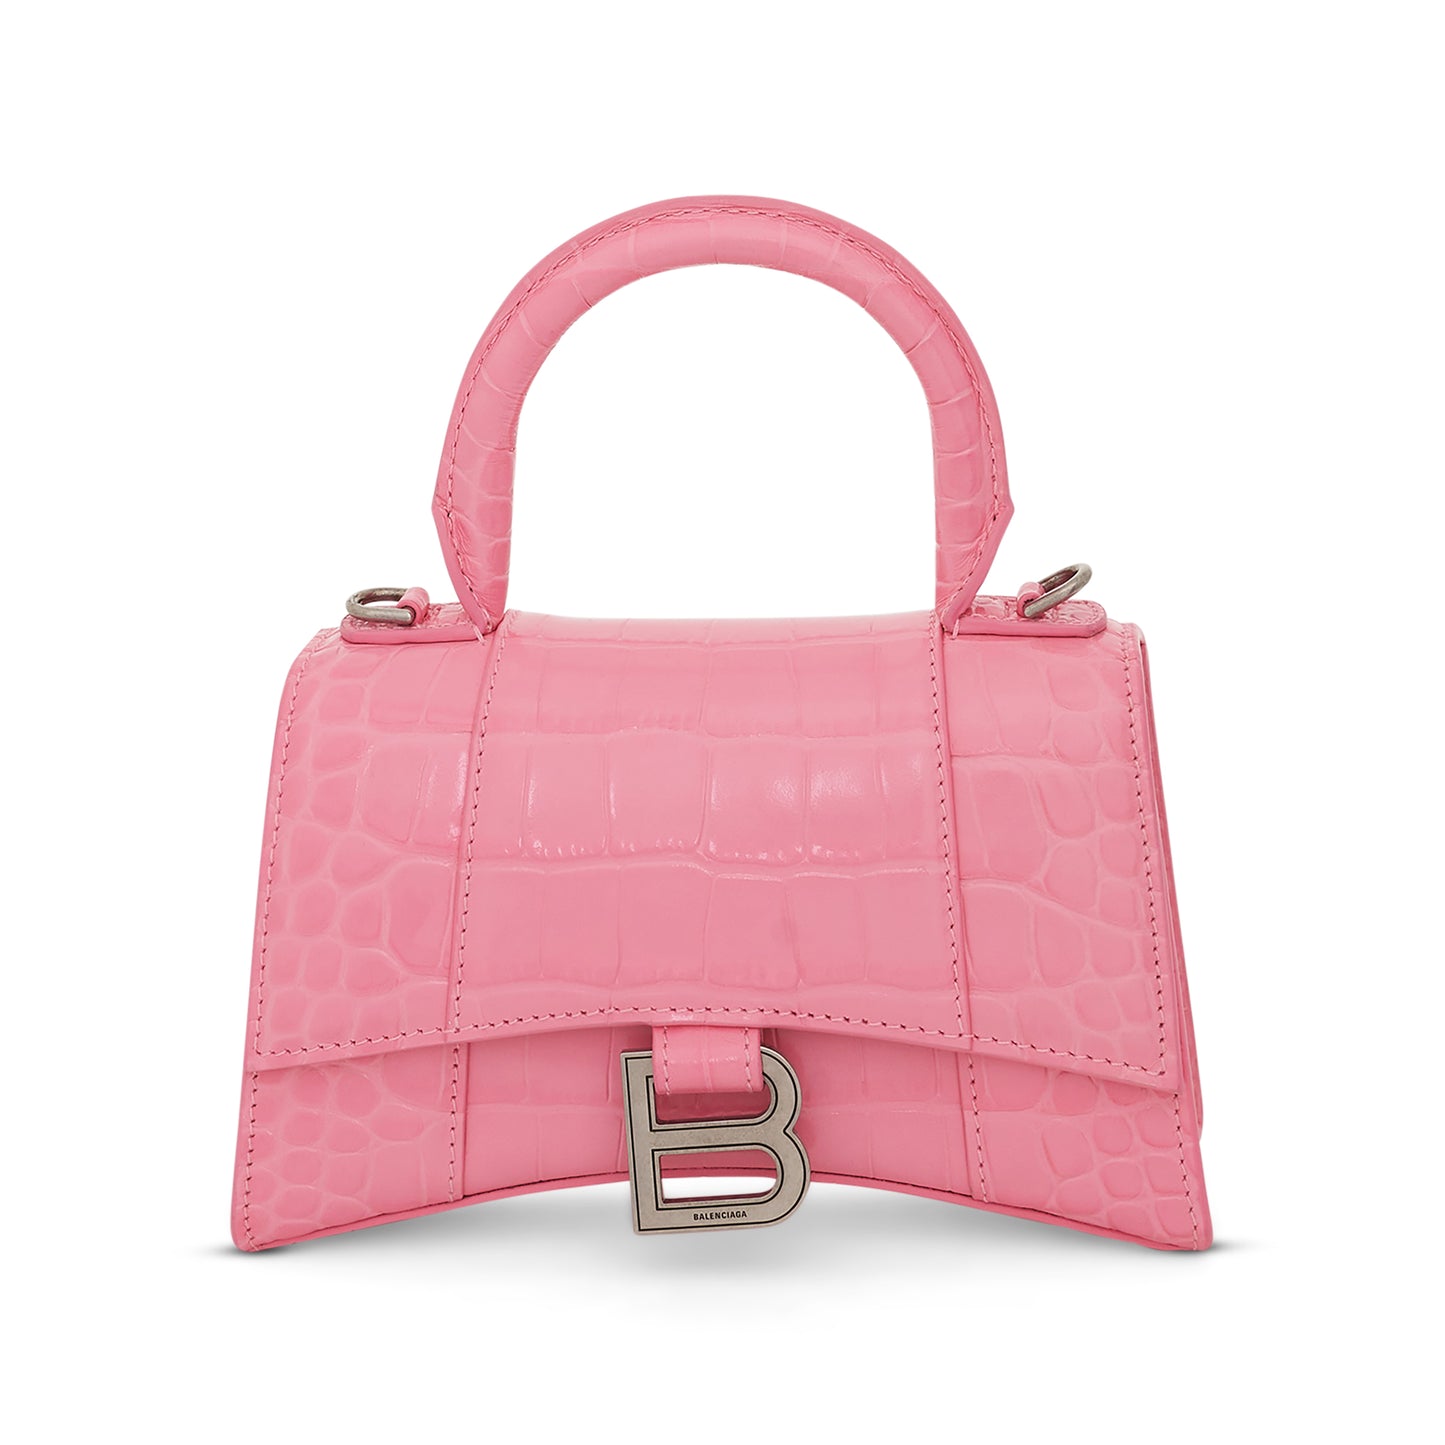 Hourglass XS Croco Embossed Bag in Sweet Pink